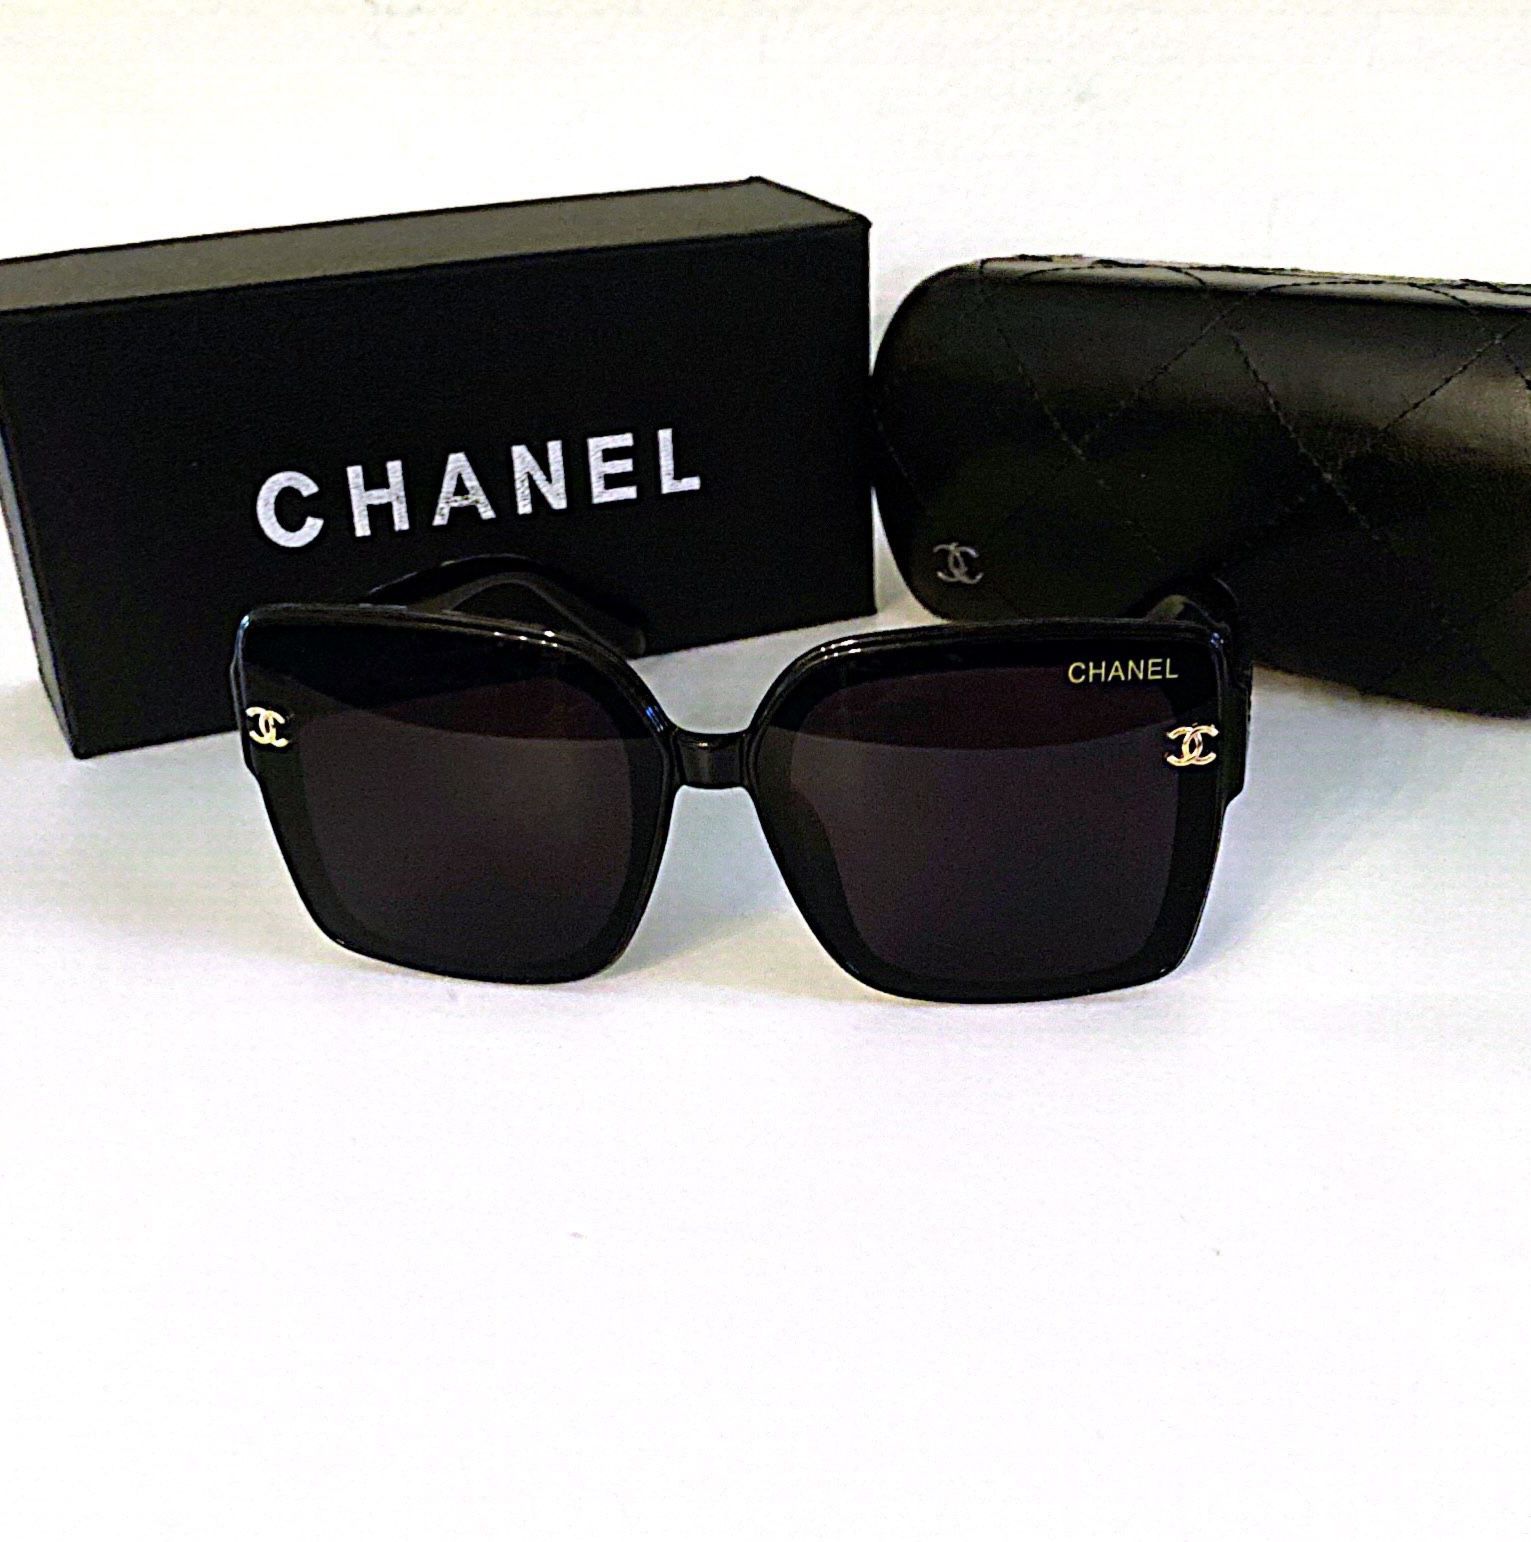 Chanel Glasses for Sale in Litchfield Park, AZ - OfferUp